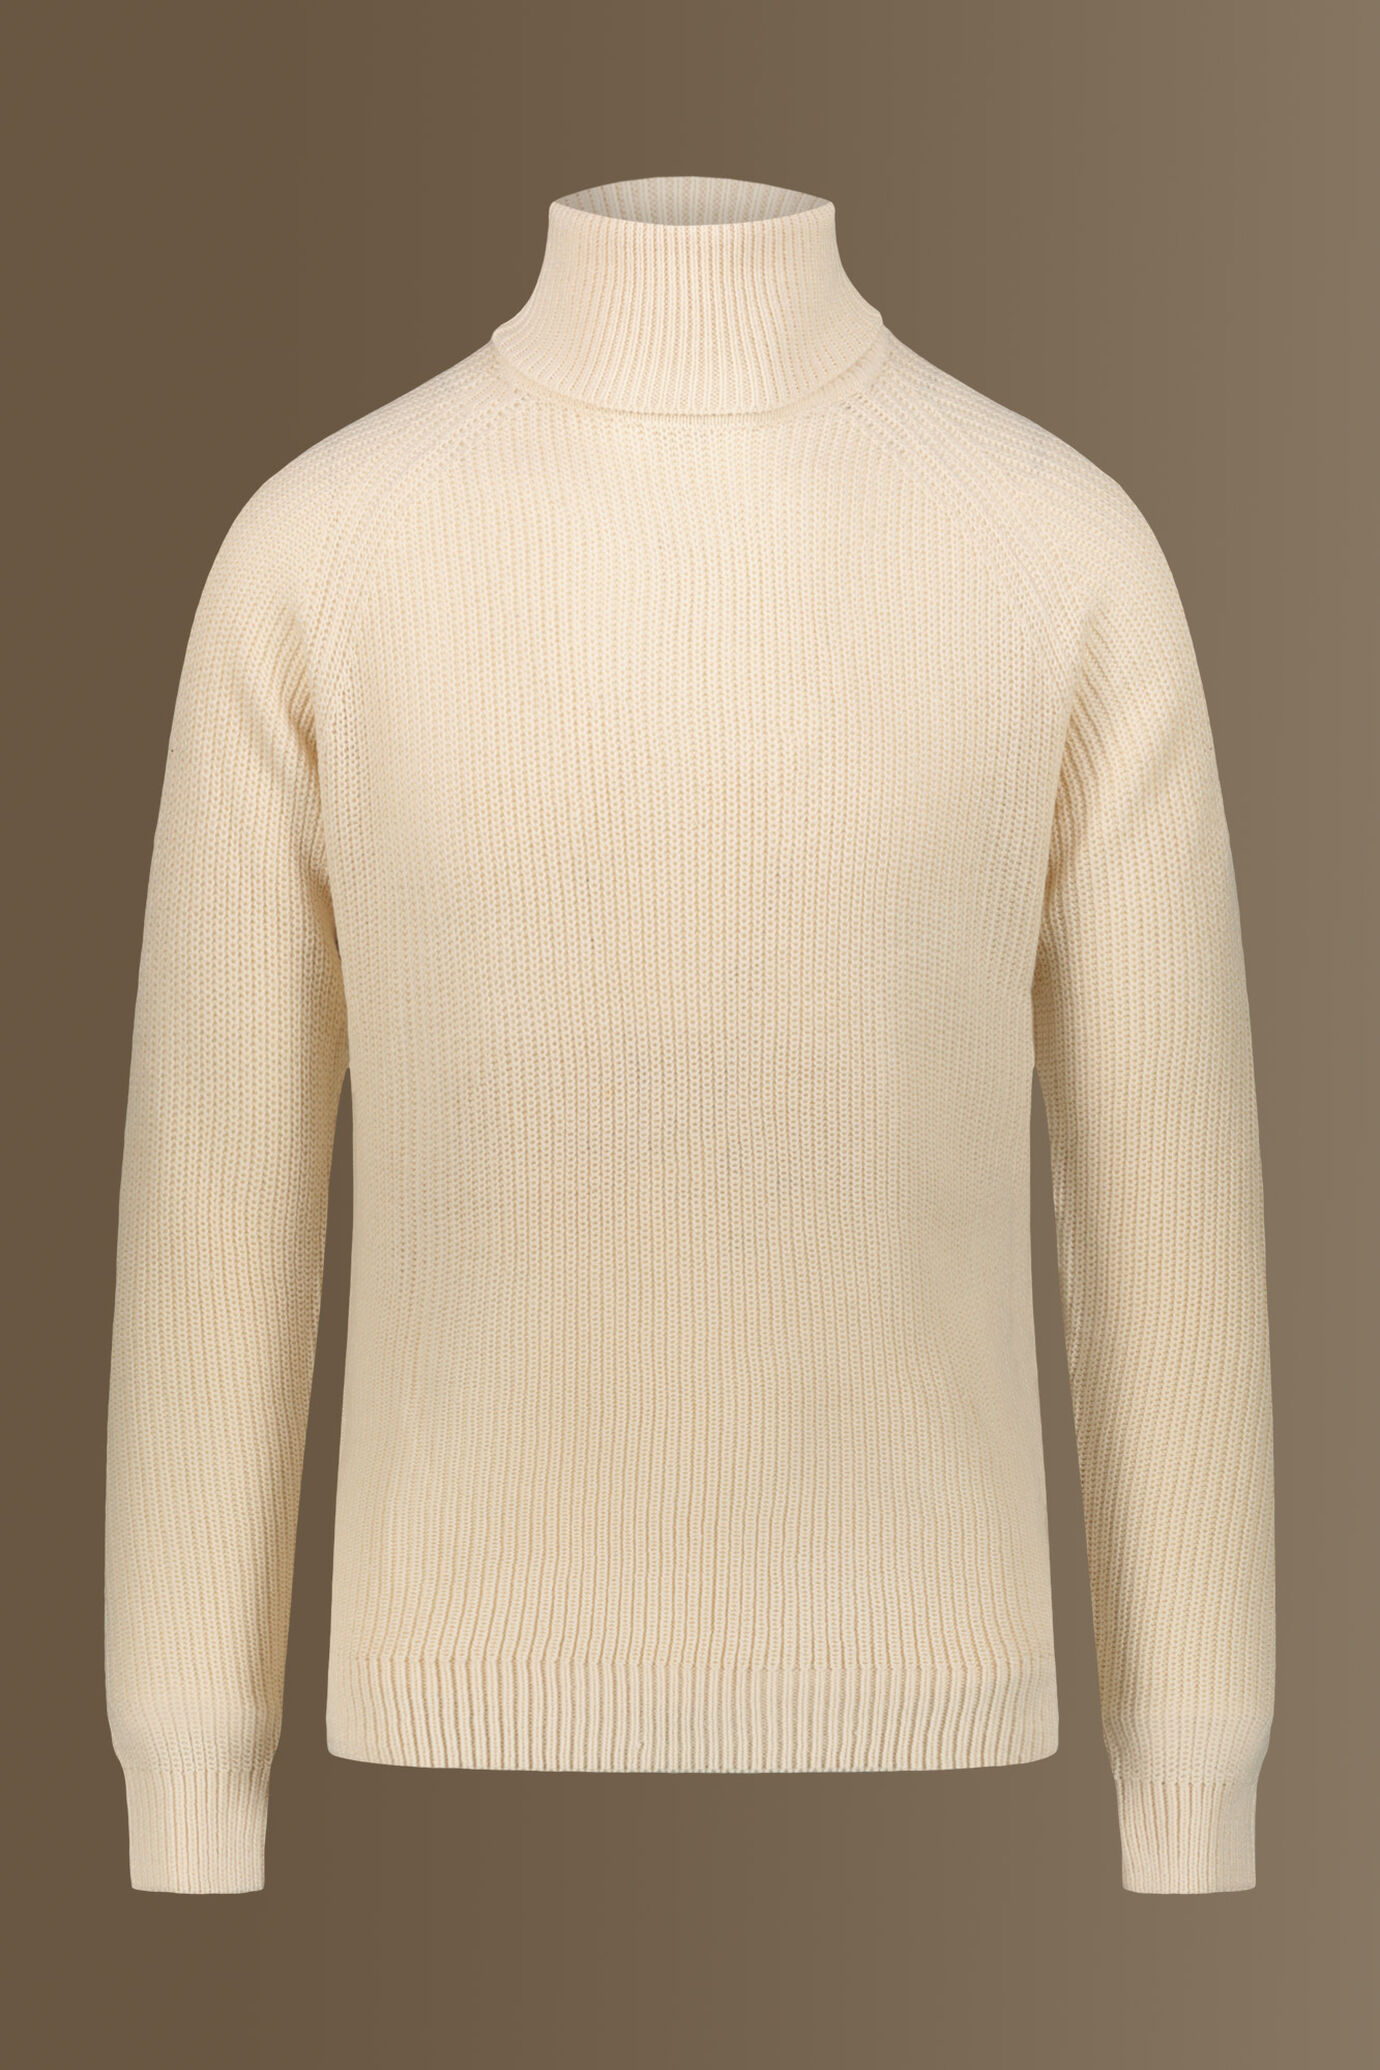 Turtle neck sweater wool blend English Rib